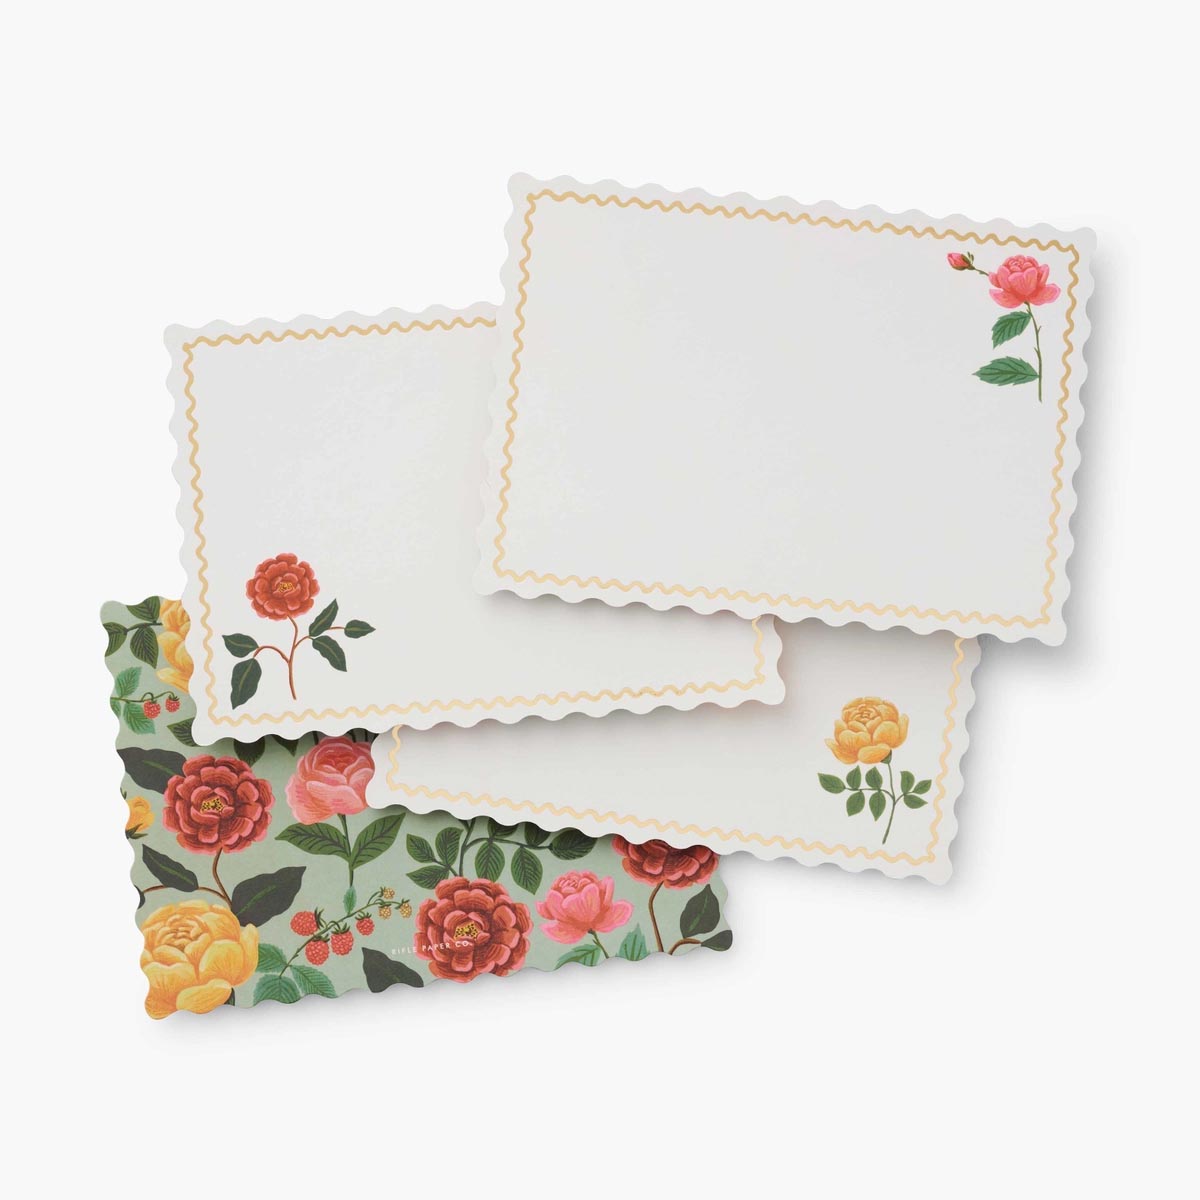 set-tarjetas-notas-rosas-roses-stationery-set-rifle-paper-pepa-paper-fna008-02